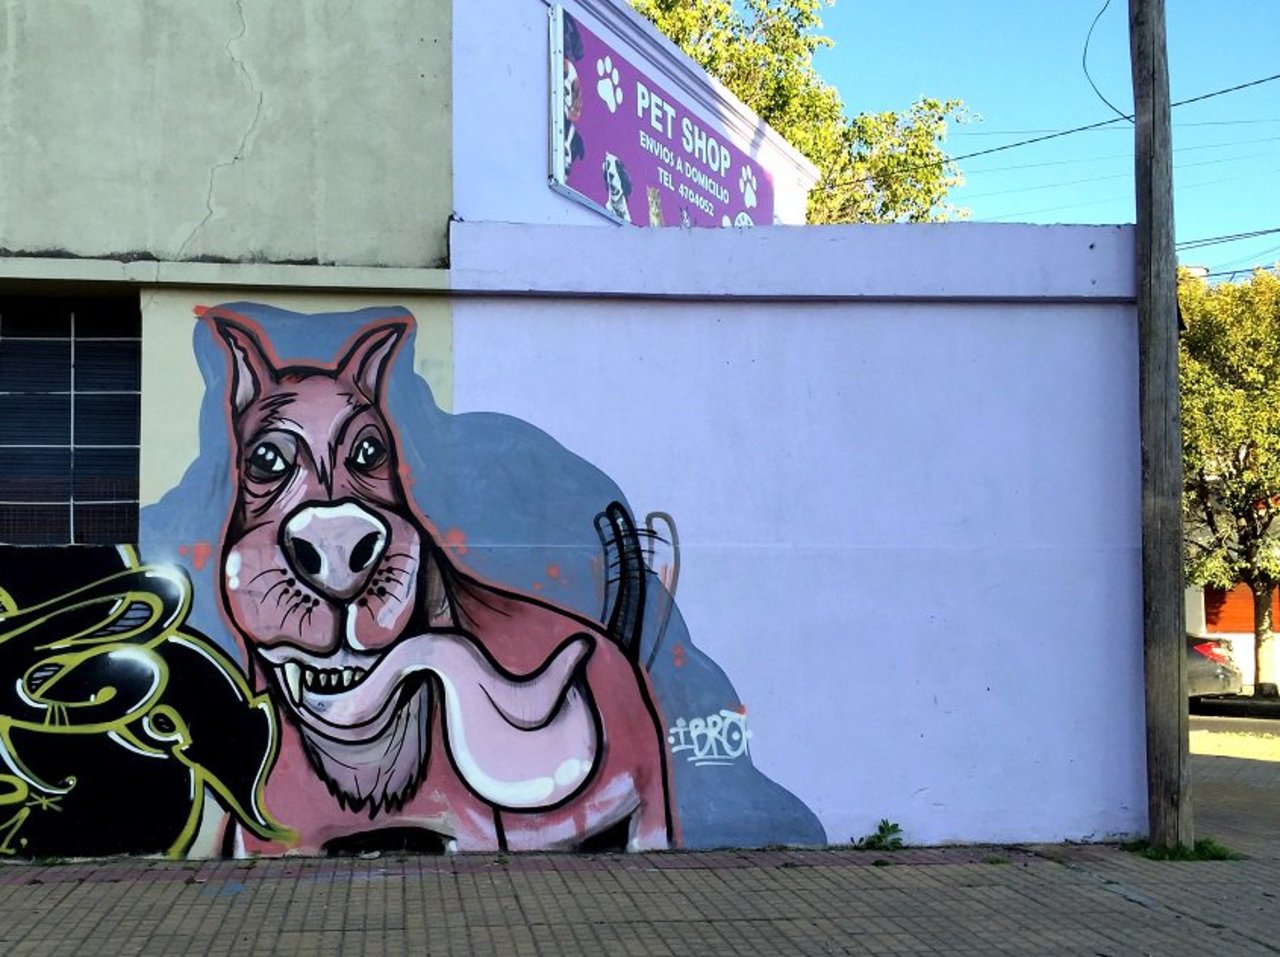 RT @DickieRandrup: #Graffiti de hoy: << Man’s best friend >> Diag. 76y46 #LaPlata #Argentina #StreetArt #UrbanArt #ArteUrbano https://t.co/geZ7lv2cJW